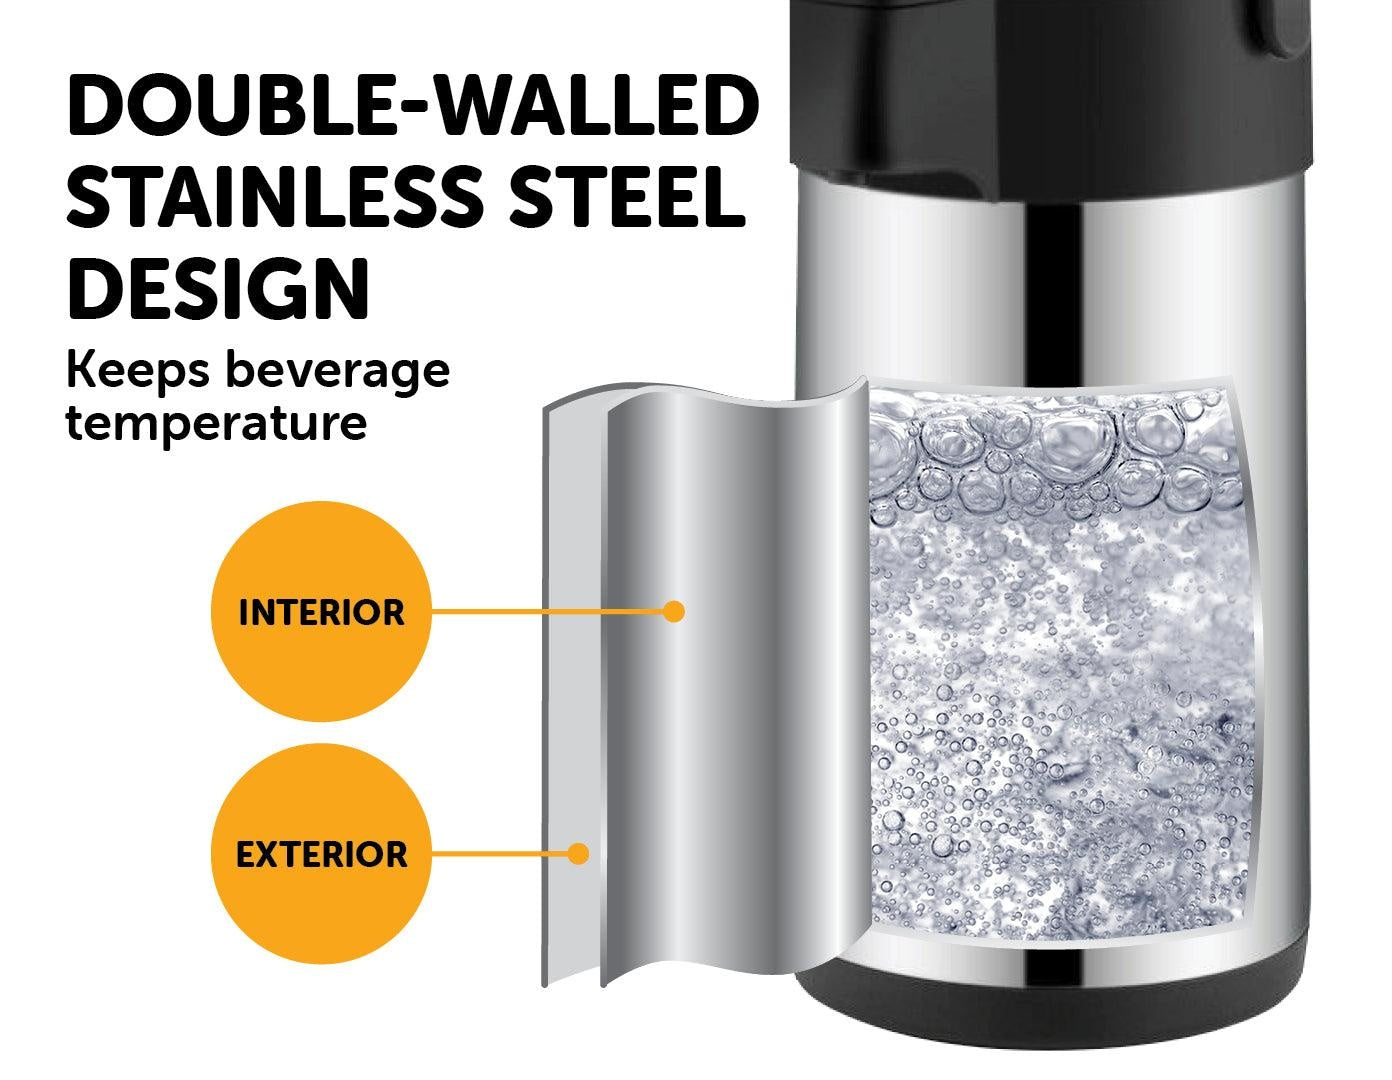 Air Pot for Tea Coffee 5L Pump Action Insulated Airpot Flask Drink Dispenser Deals499